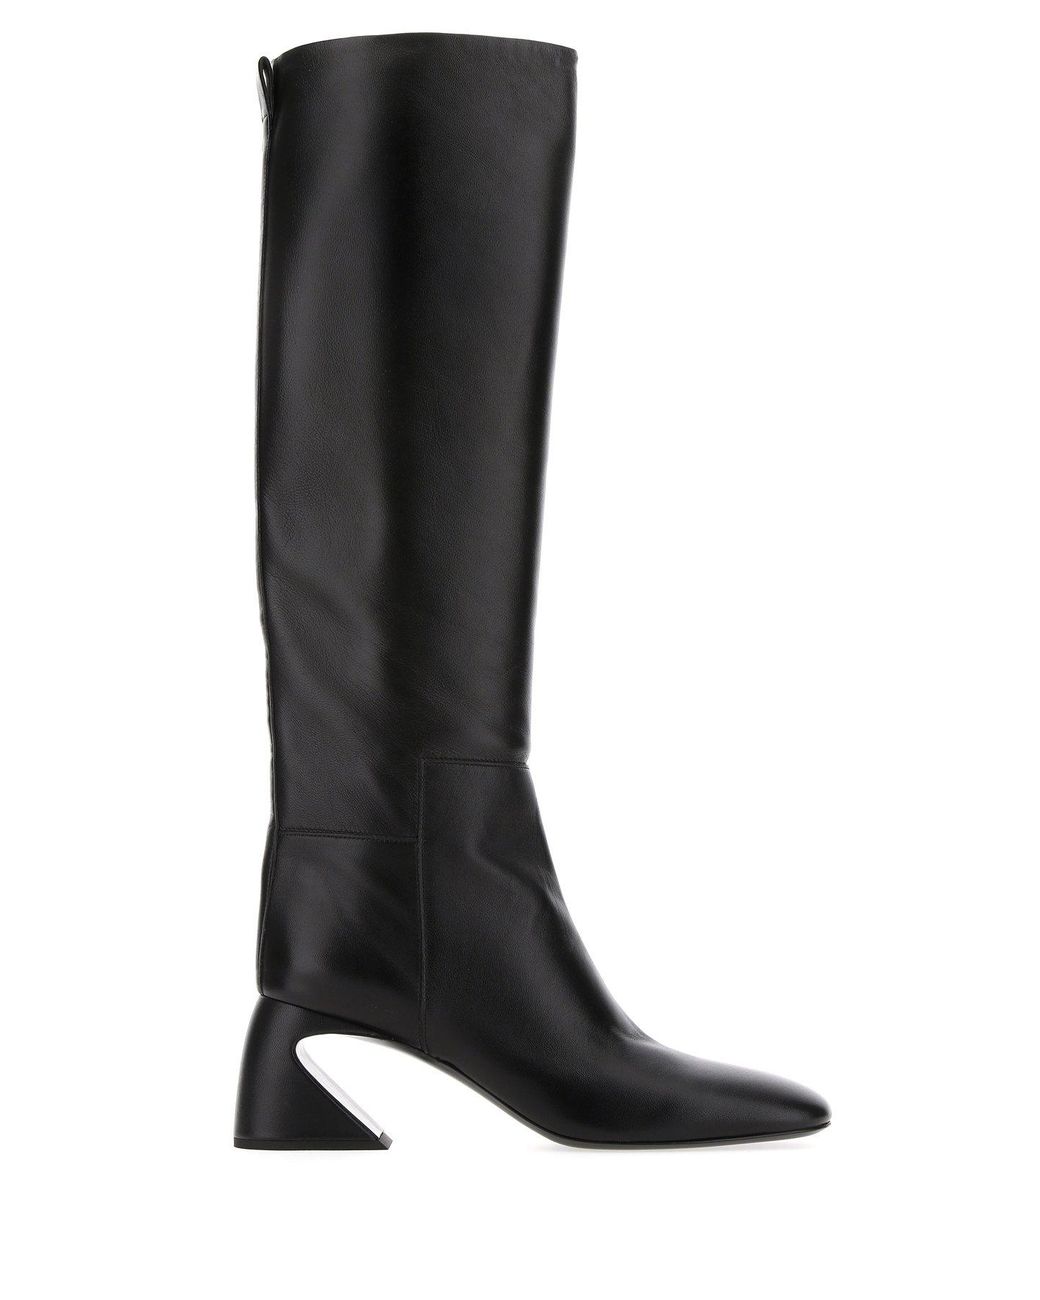 Jil Sander Leather Sculpted Heel Knee-high Boots in Black - Lyst